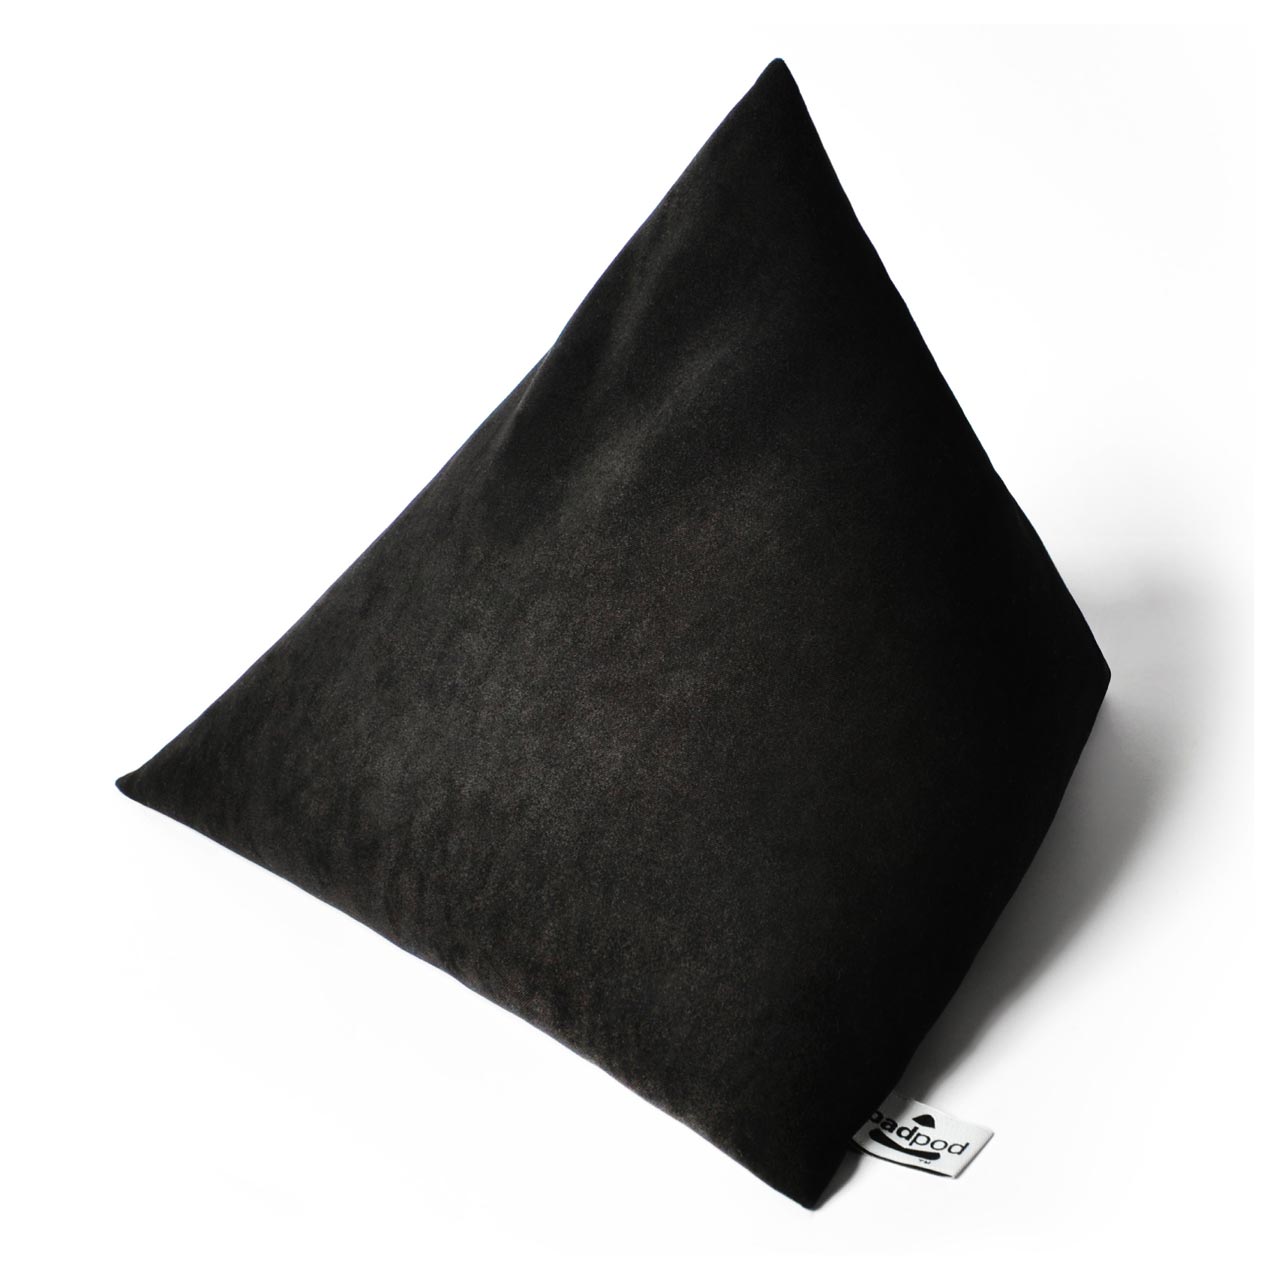 PADPOD iPad / tablet cushion black | The Design Gift Shop